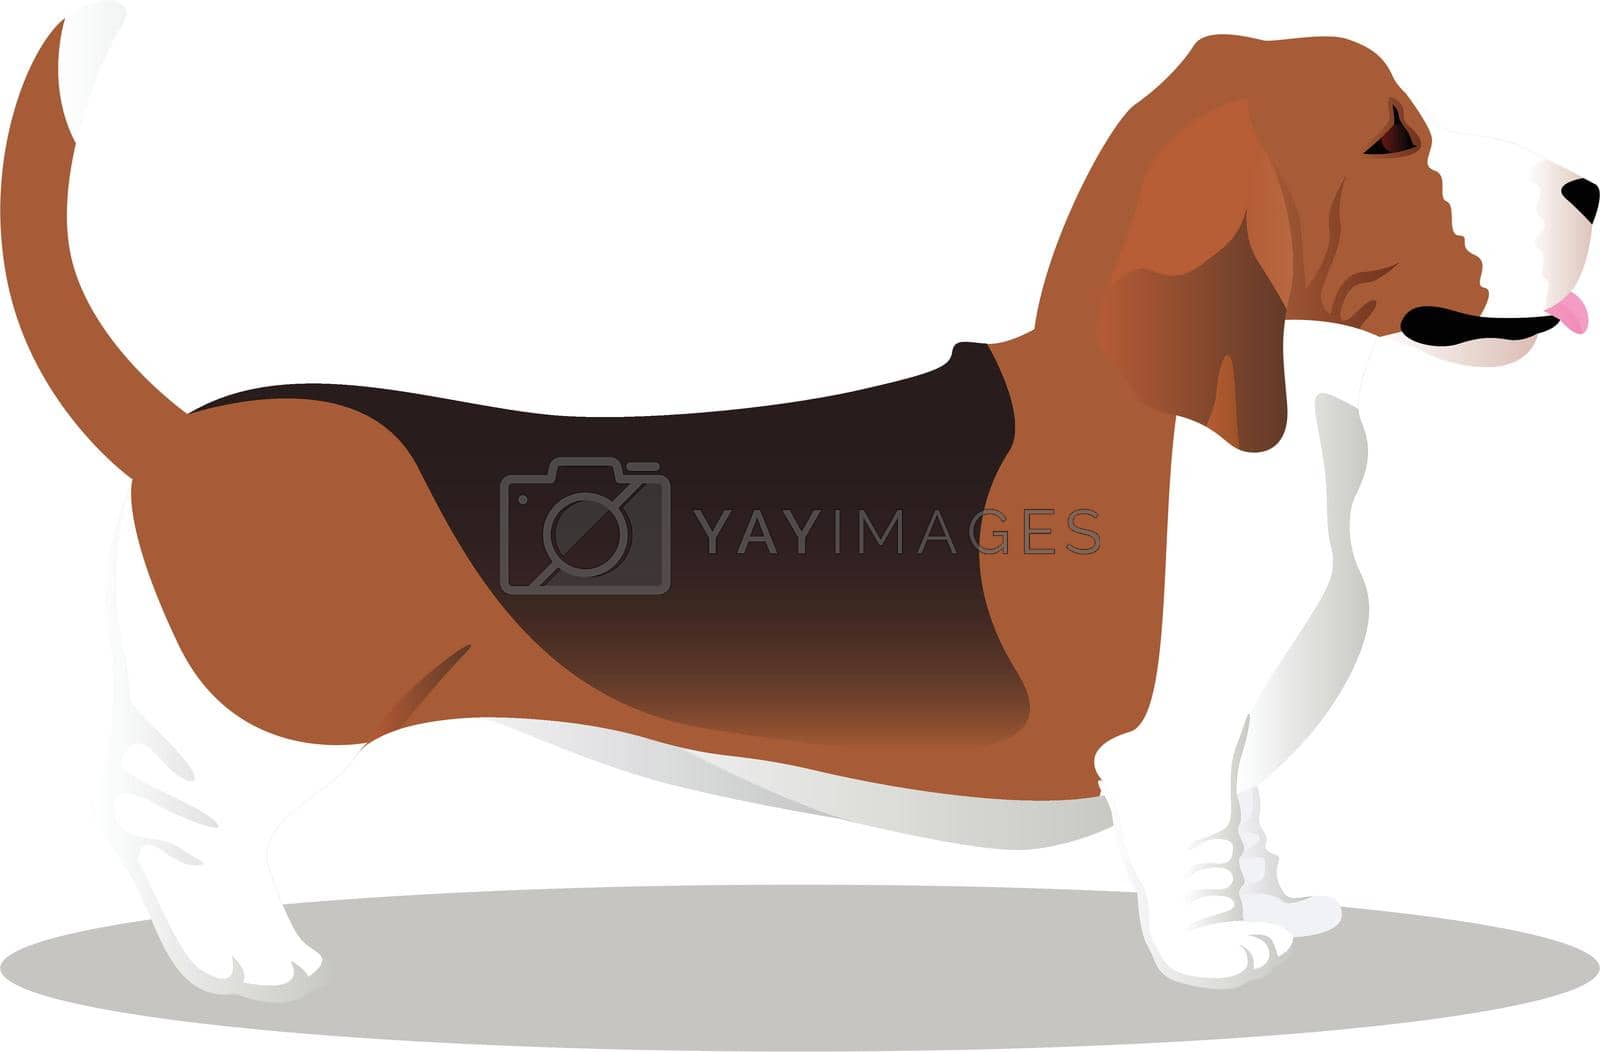 Royalty free image of Basset hound dog by Marishkayu